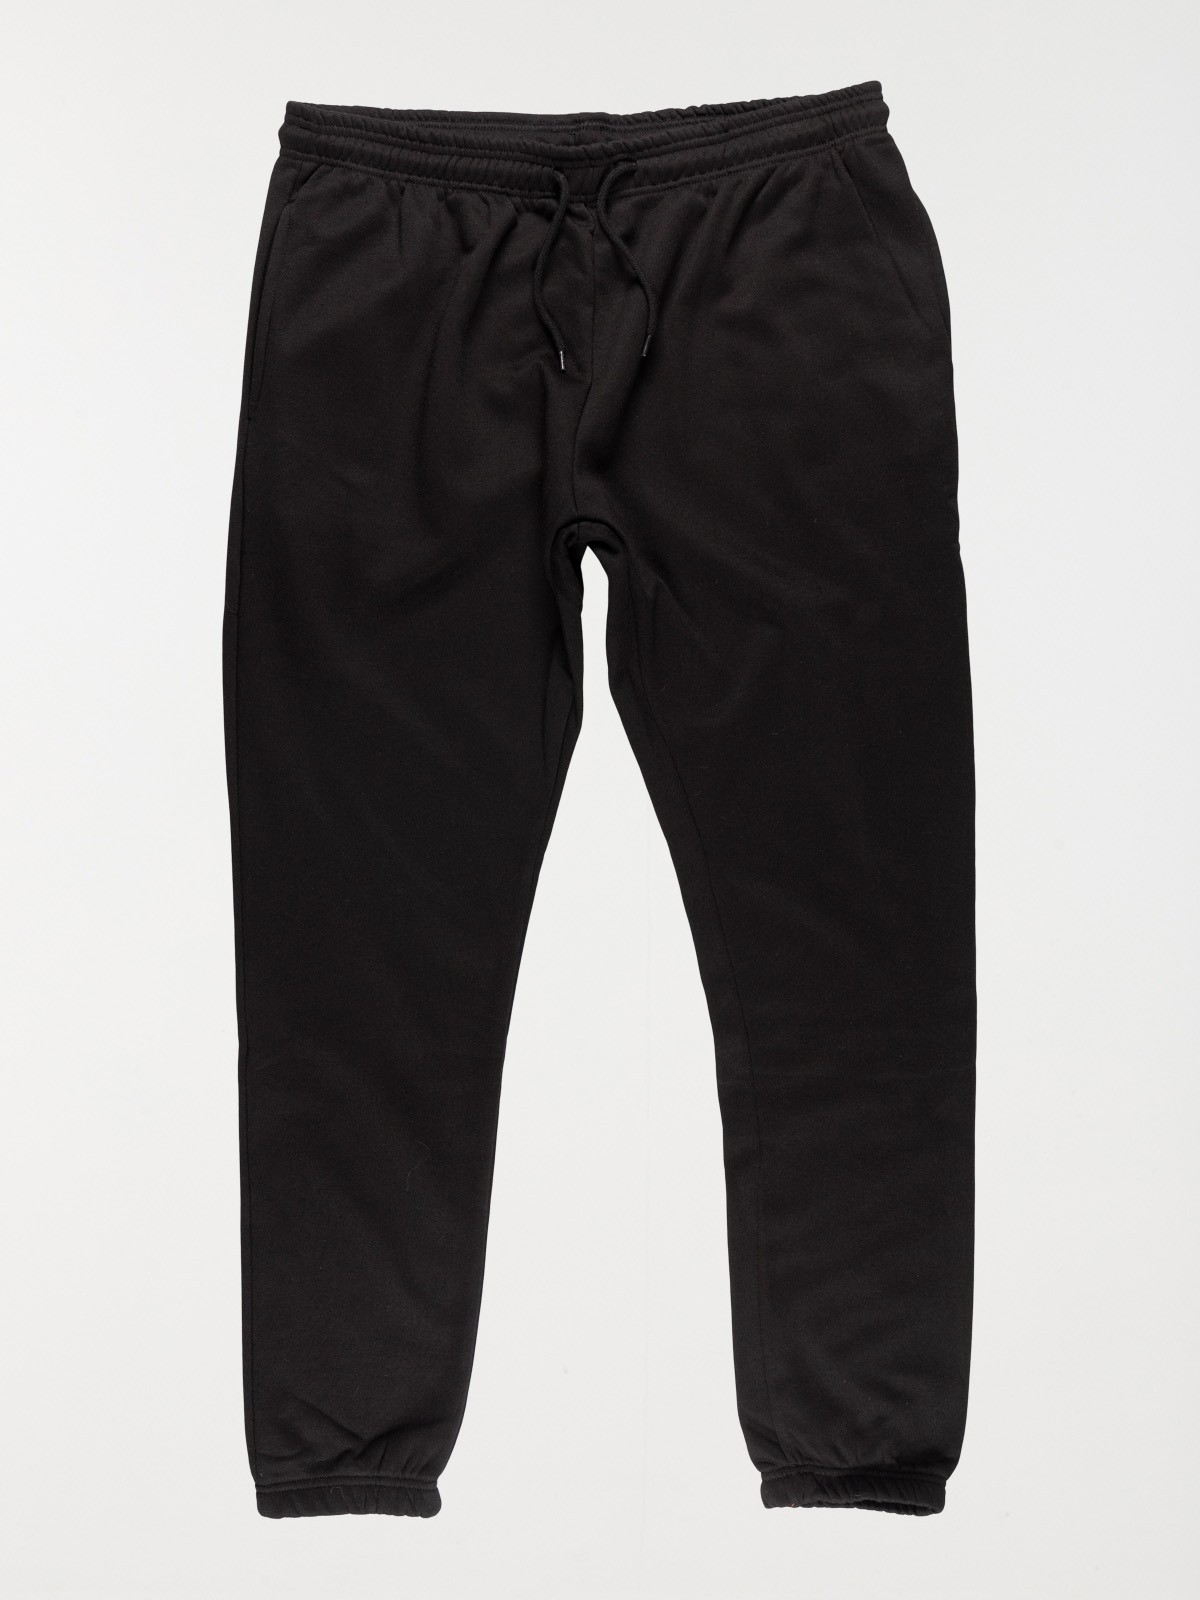 Pantalon sport noir homme - DistriCenter